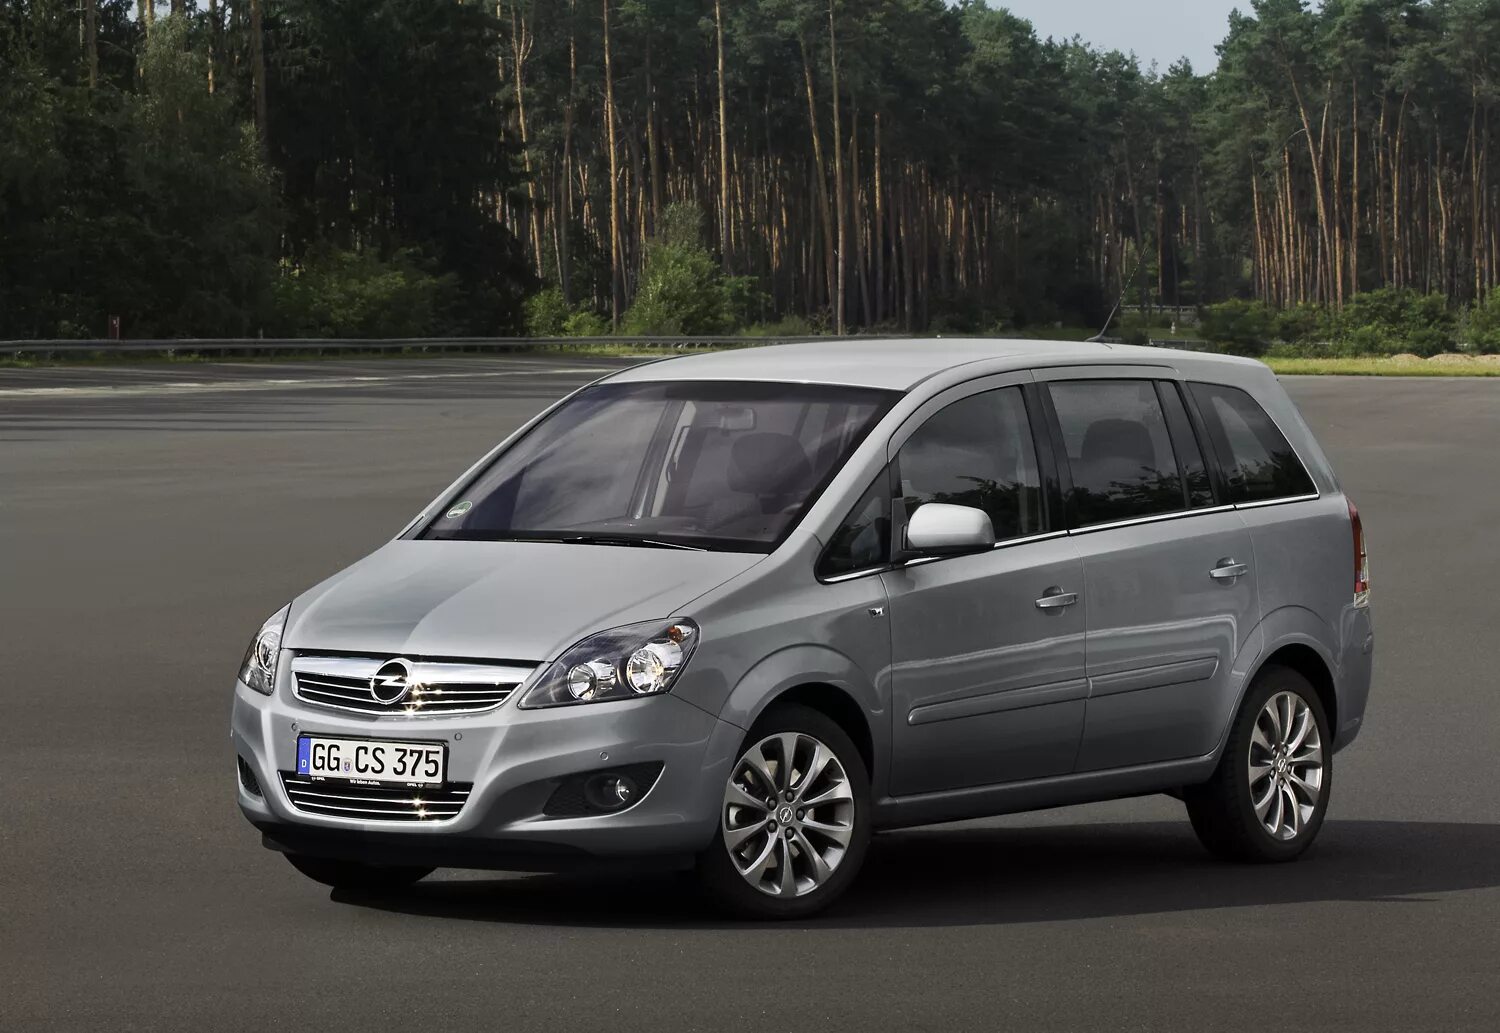 Opel Zafira b 2014. Opel Zafira b 2011. Опель Зафира б 2011. Зафира 2. Опель зафира 2.2 купить